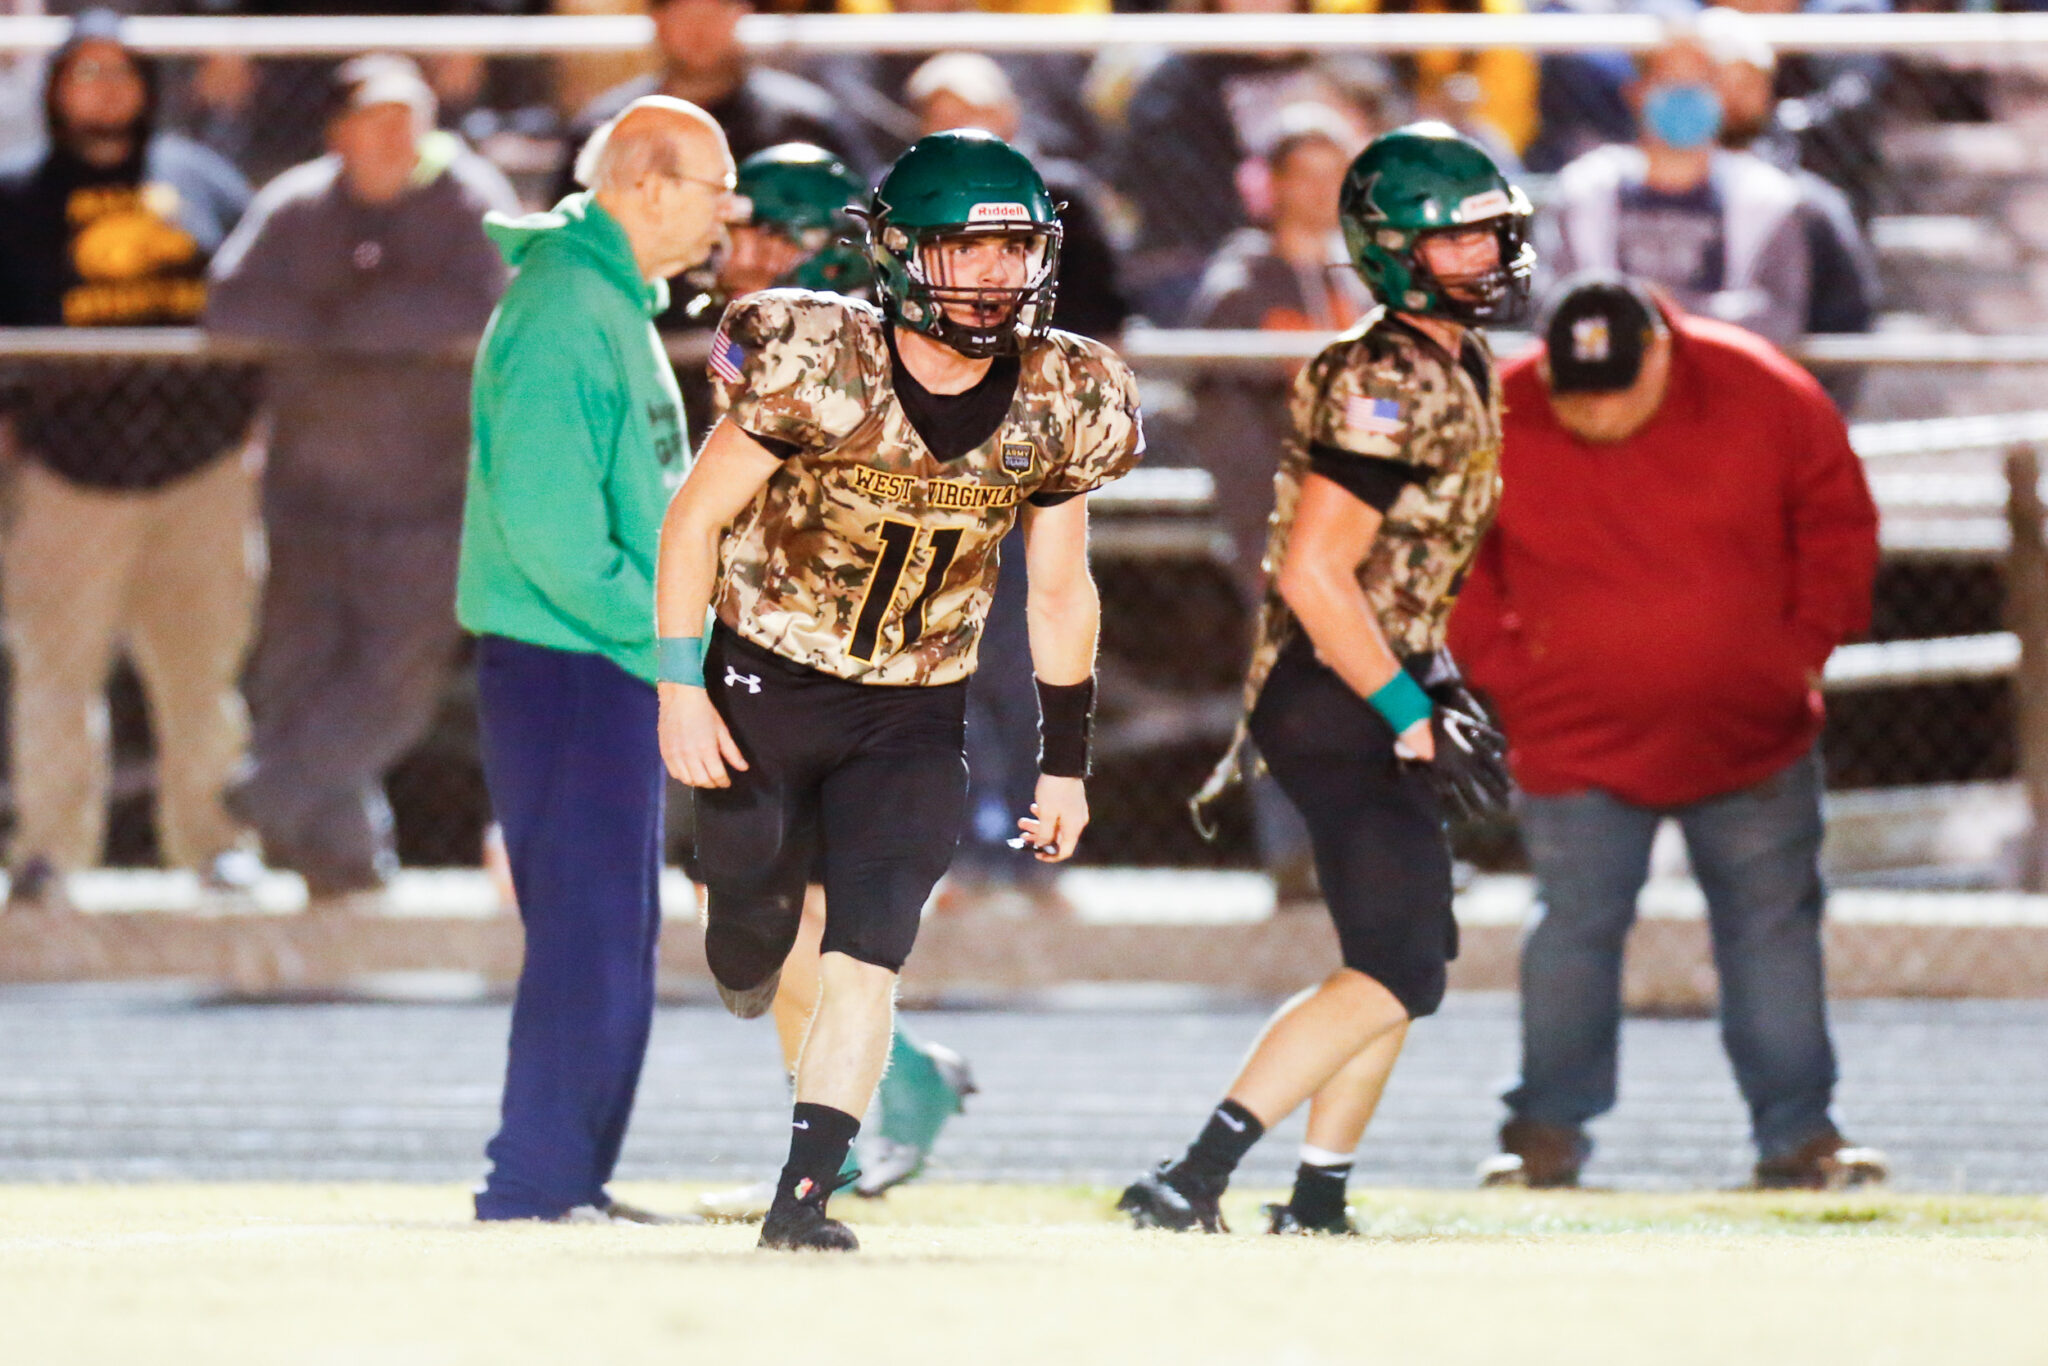 High school football teams across Ohio to wear camouflage jerseys